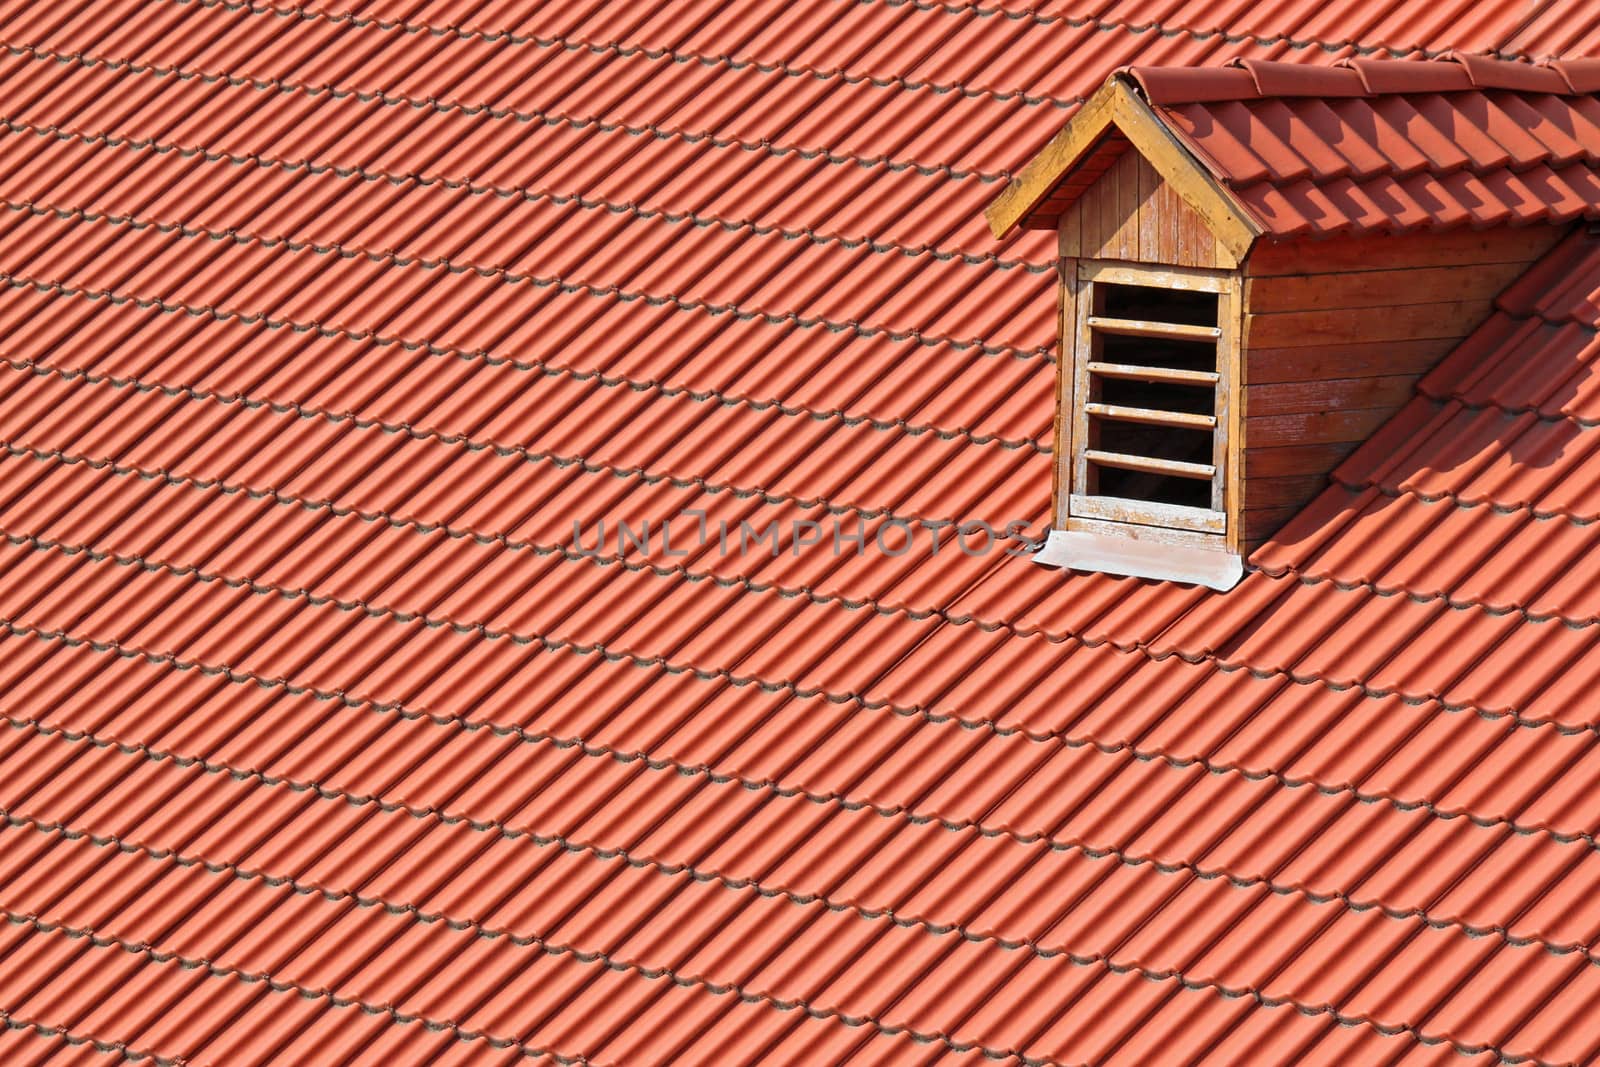 garret window on red tiled roof